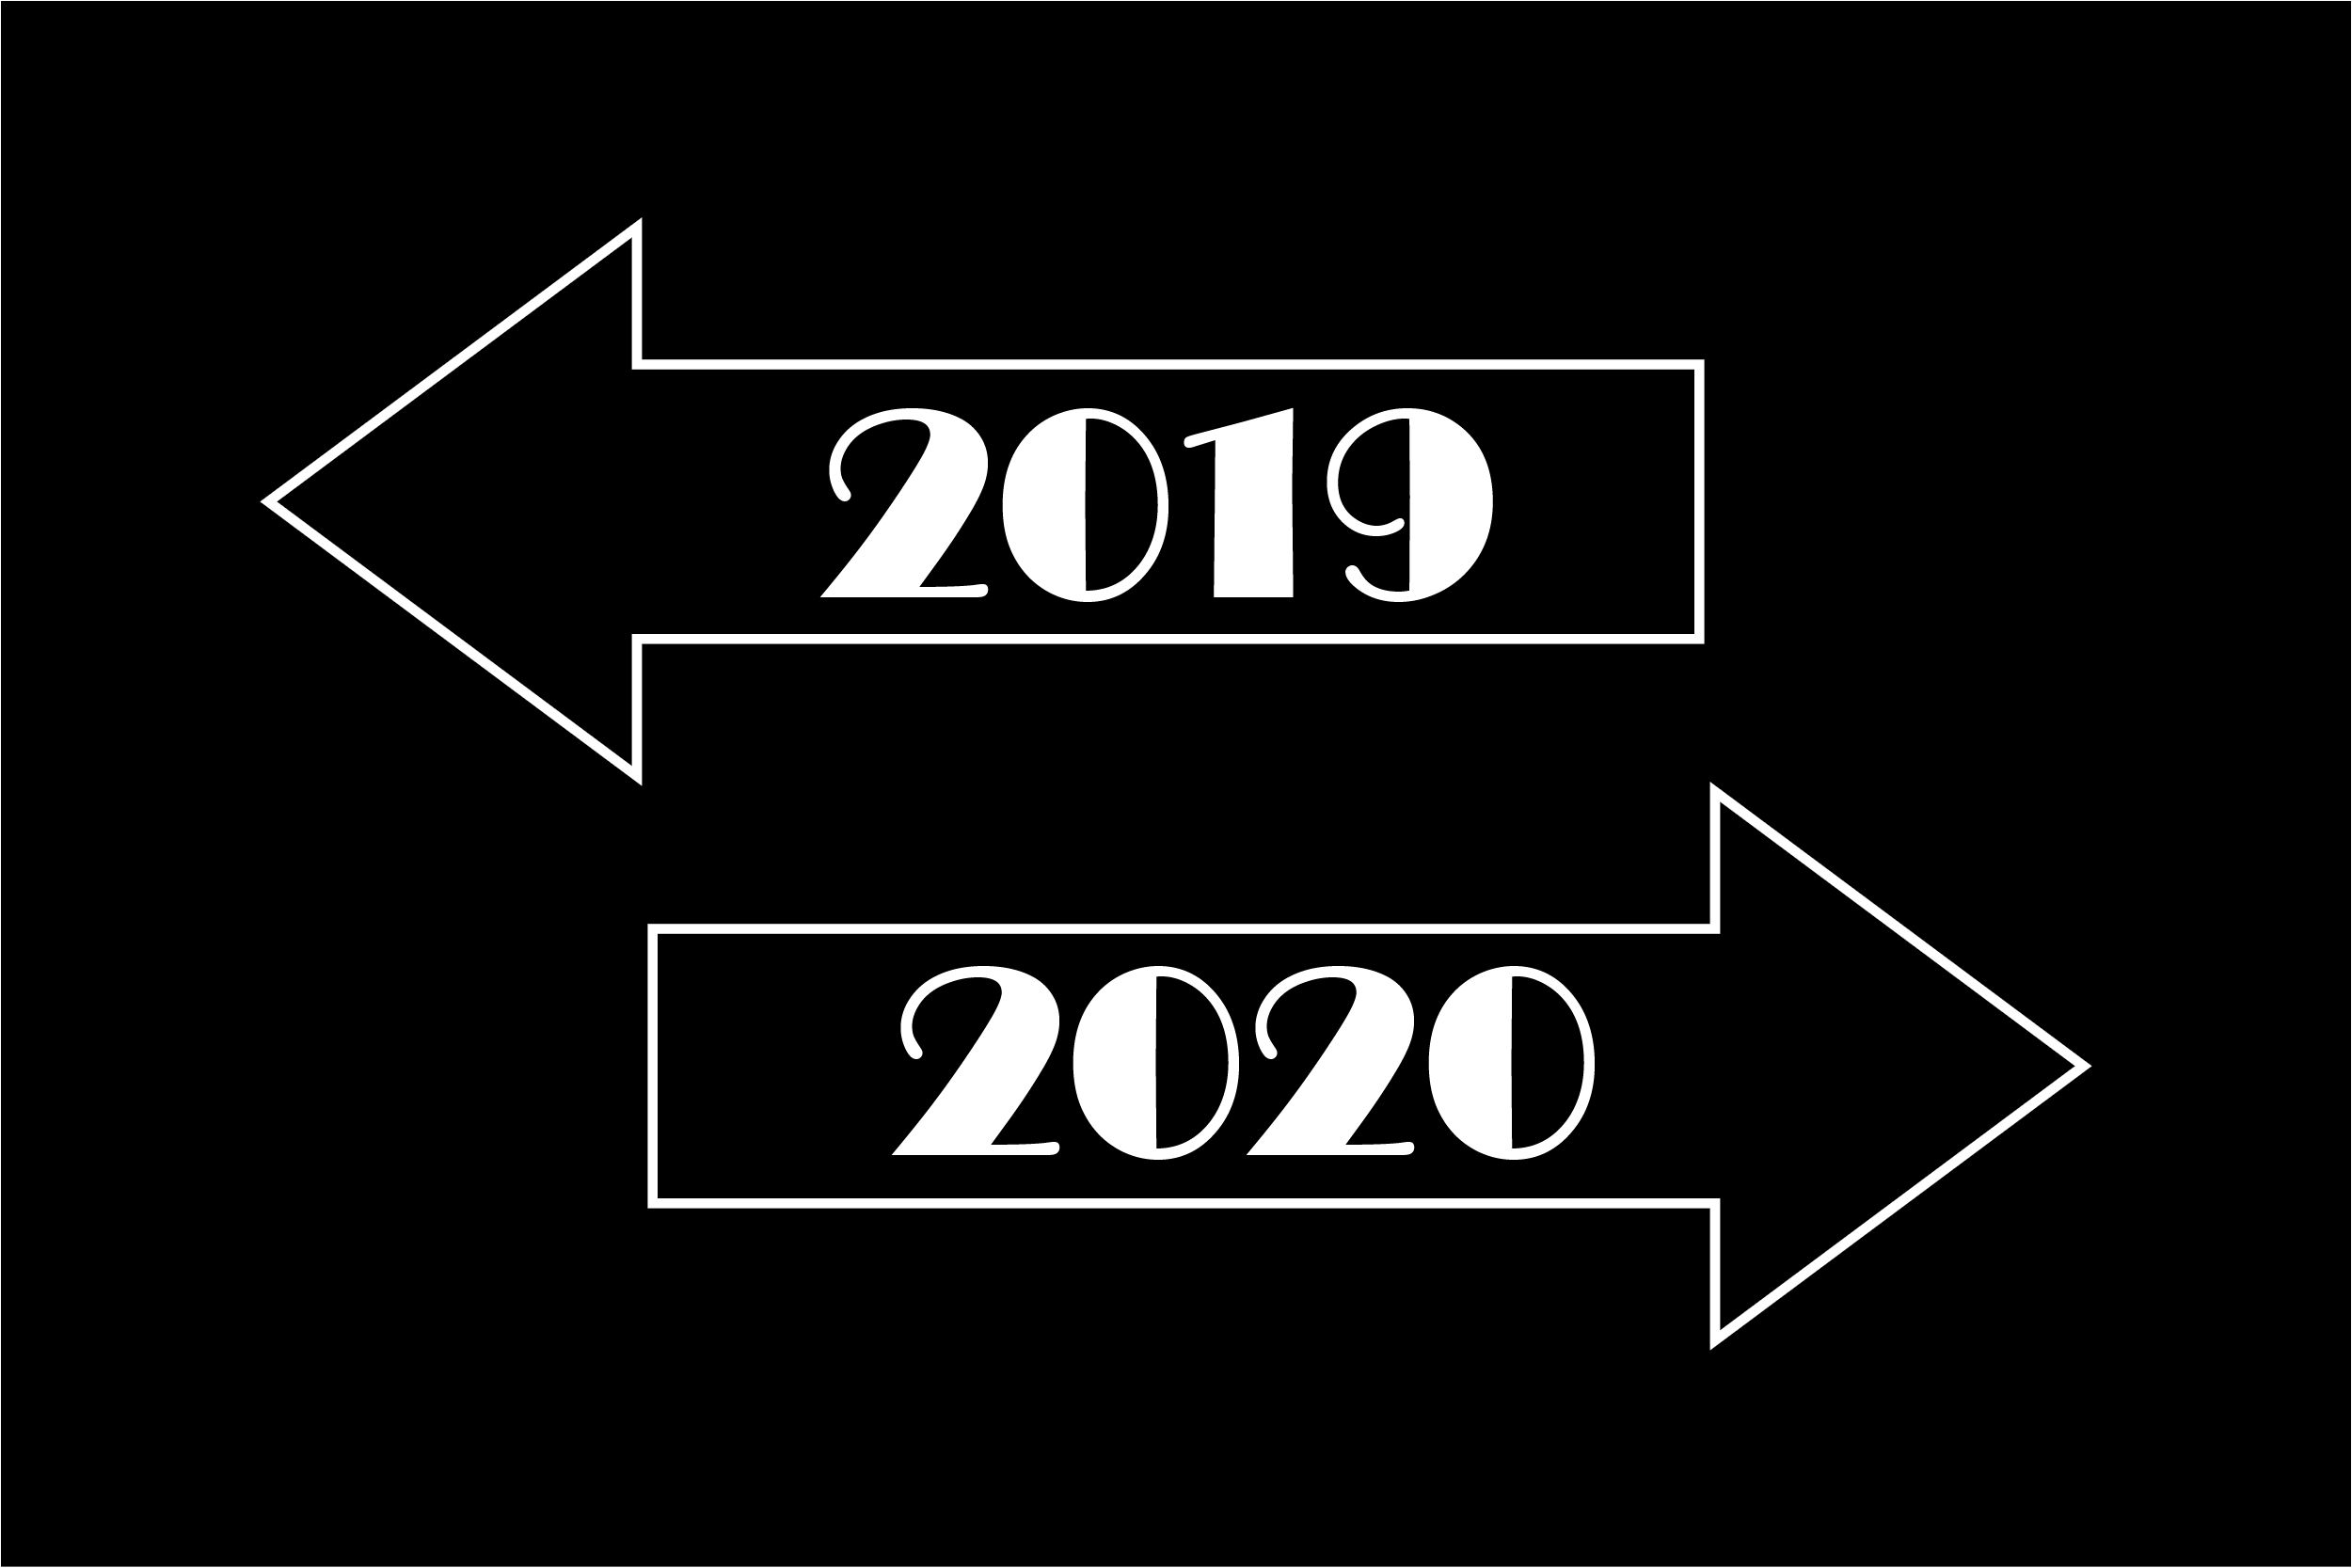 2019 into 2020